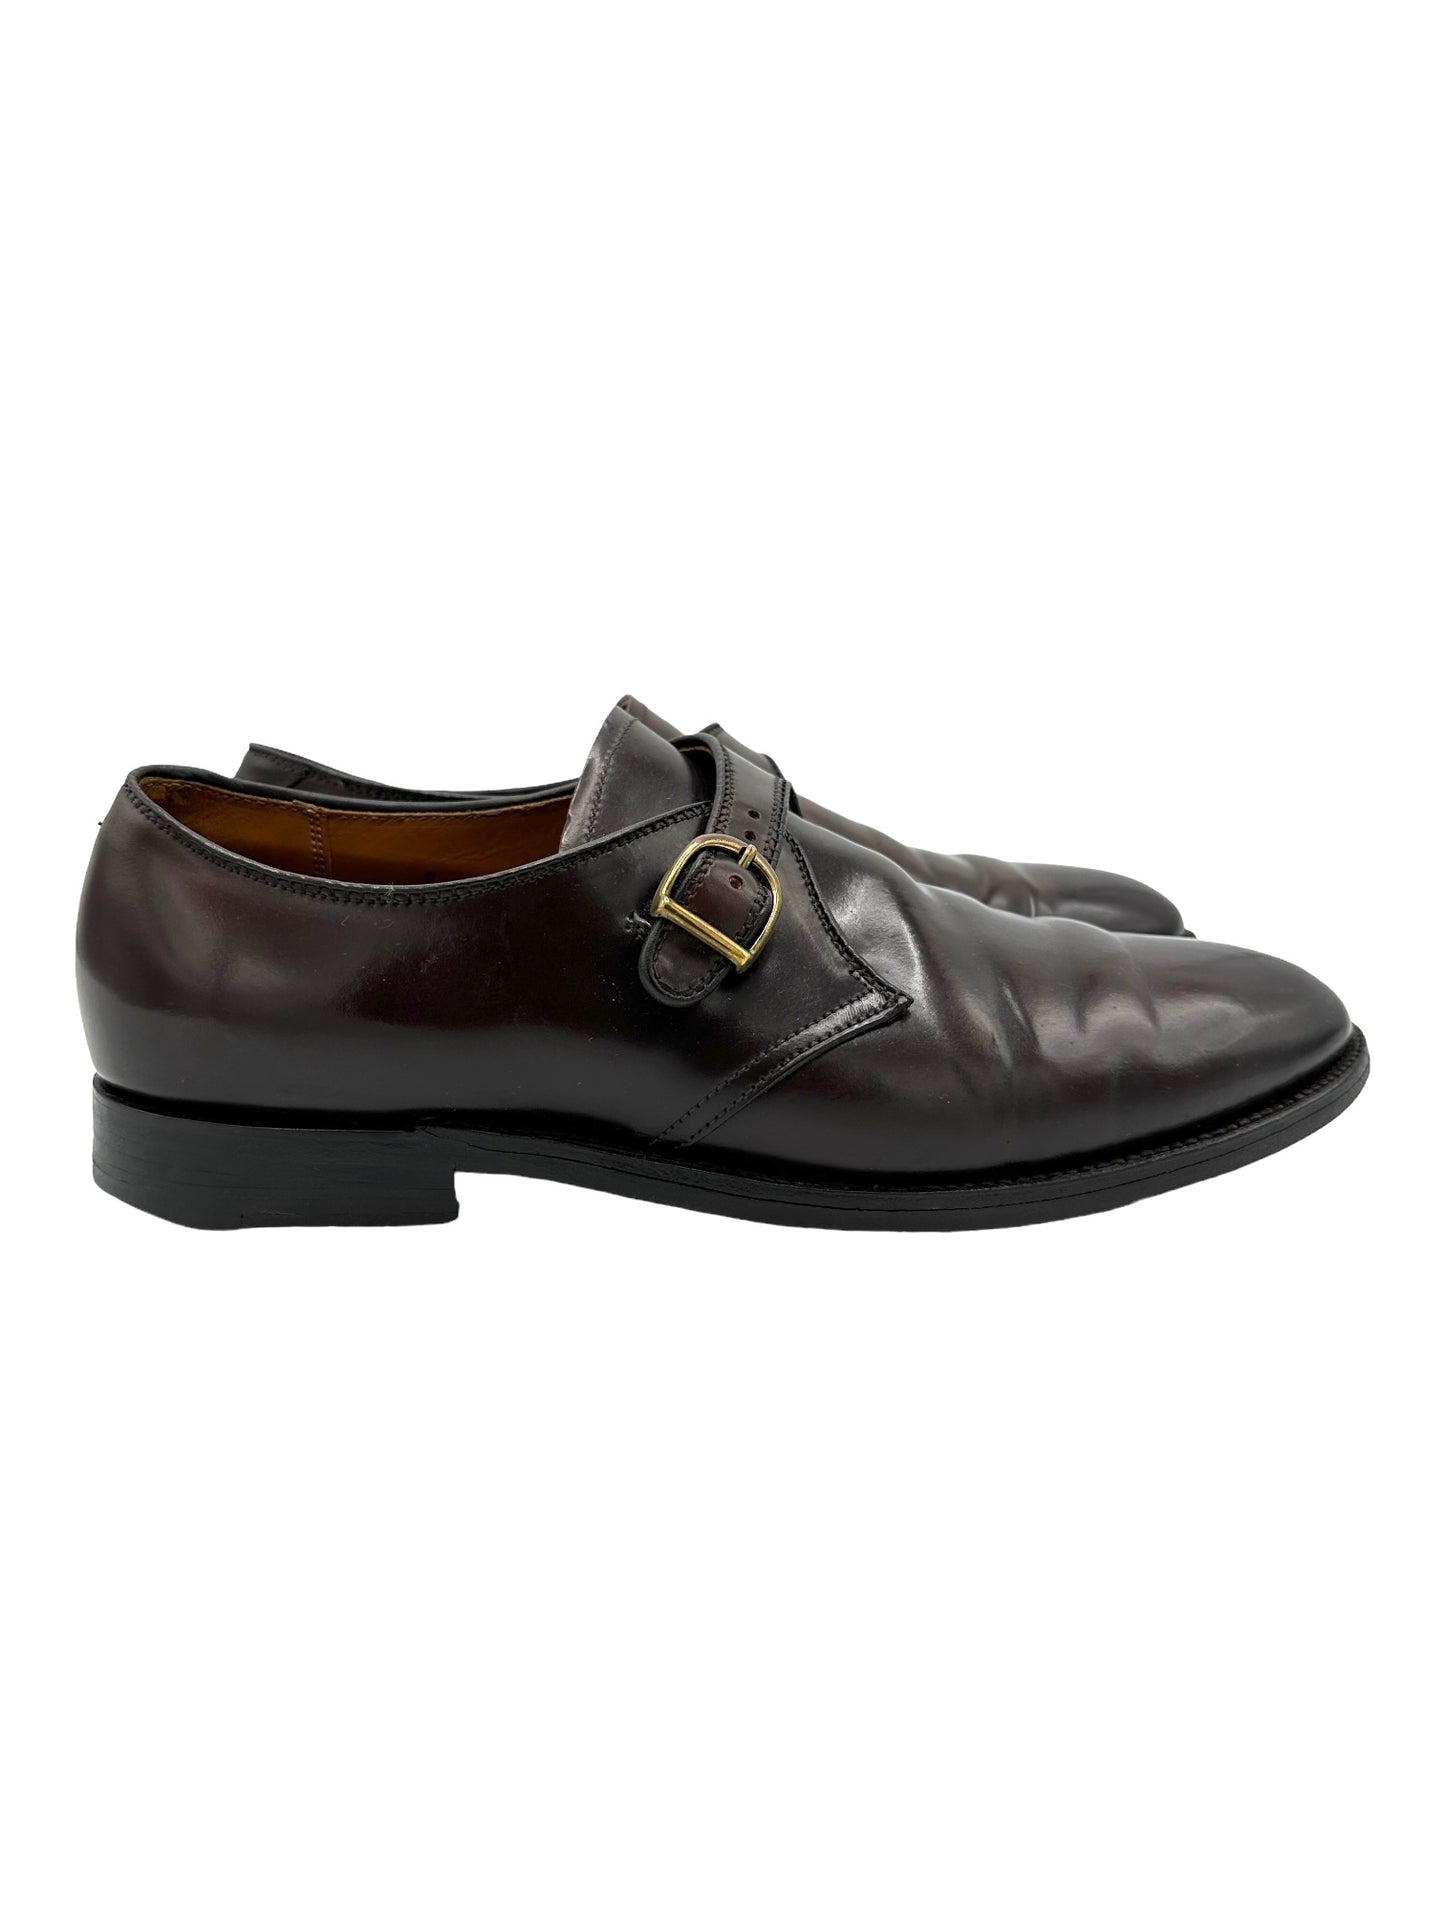 Alden 954 Monk Strap Burgundy Shell Cordovan Shoes